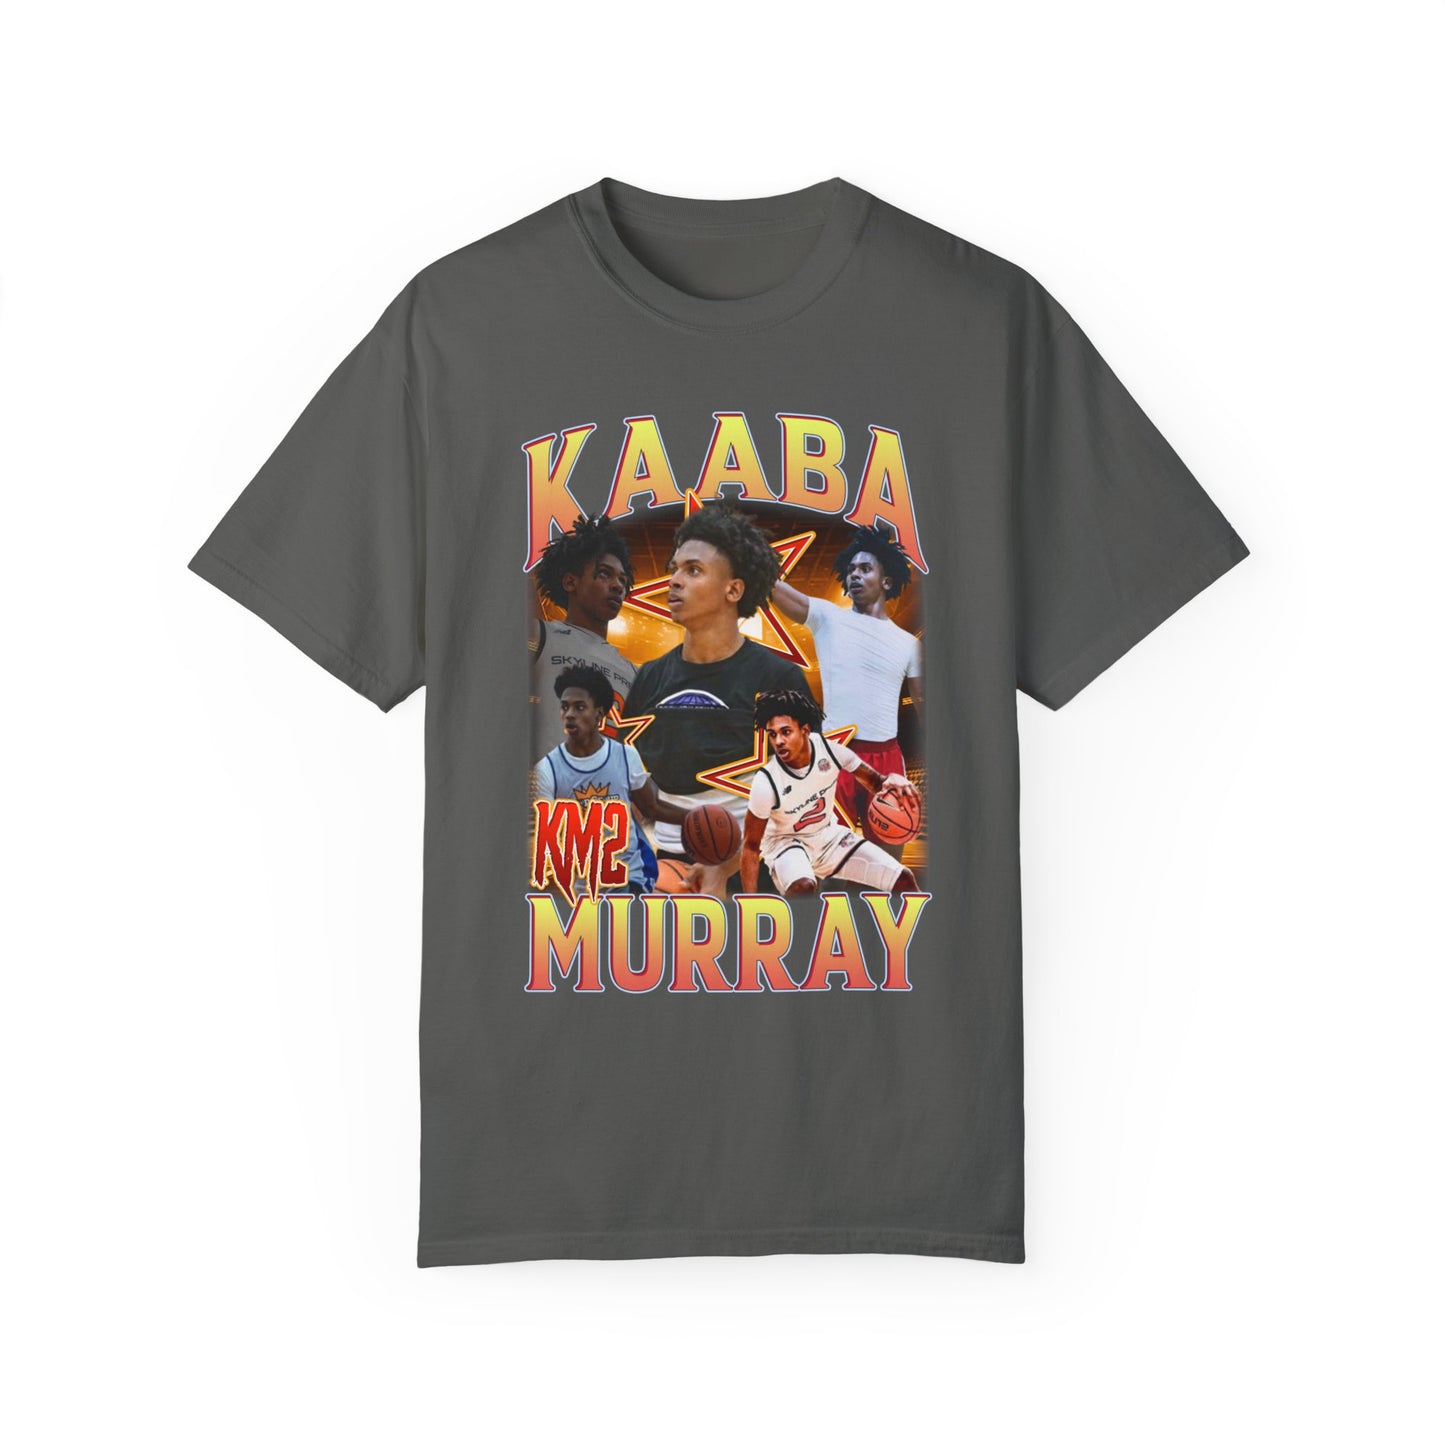 Kaaba Murray graphic T-shirt